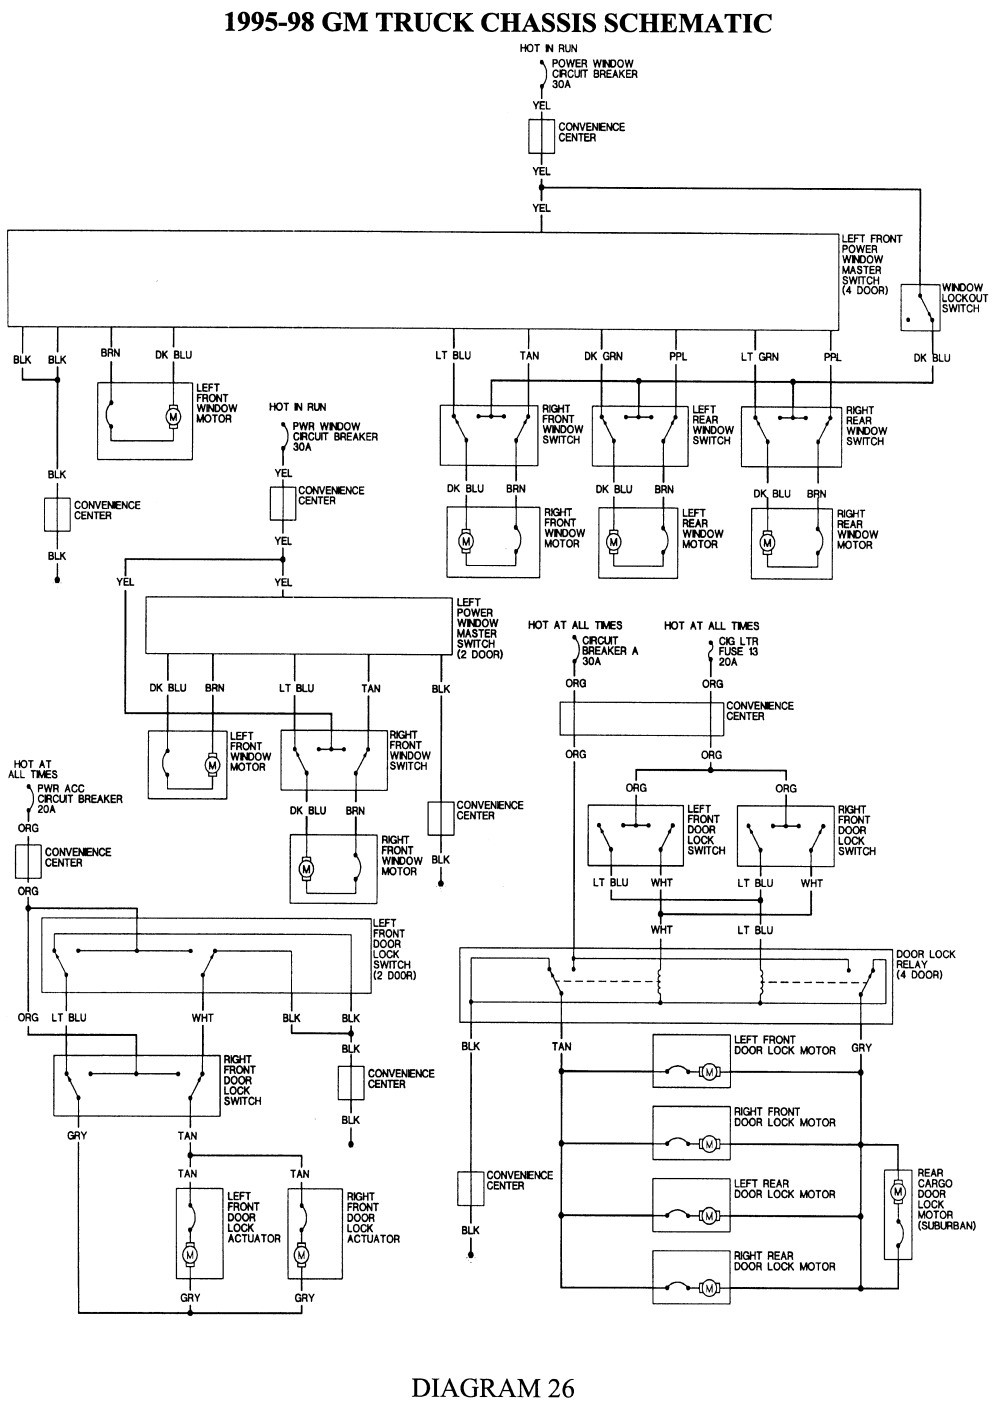 2005 Chevy Silverado Wiring Diagram Inspirational Repair Guides Wiring Diagrams Wiring Diagrams